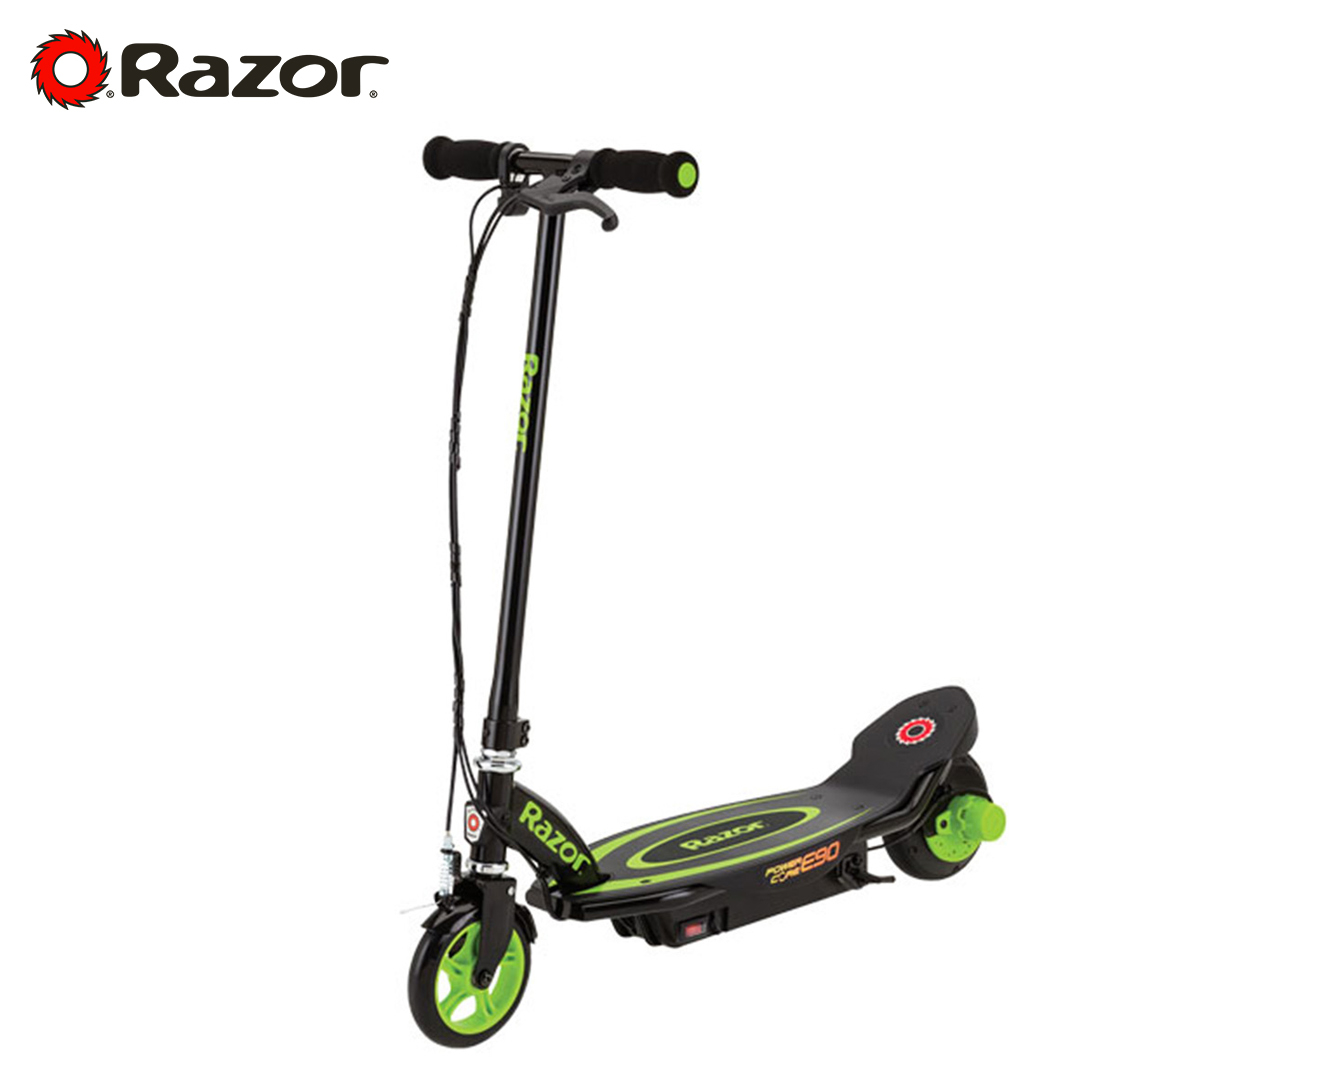 Razor Power Core E90 Electric Scooter - Green | Catch.com.au